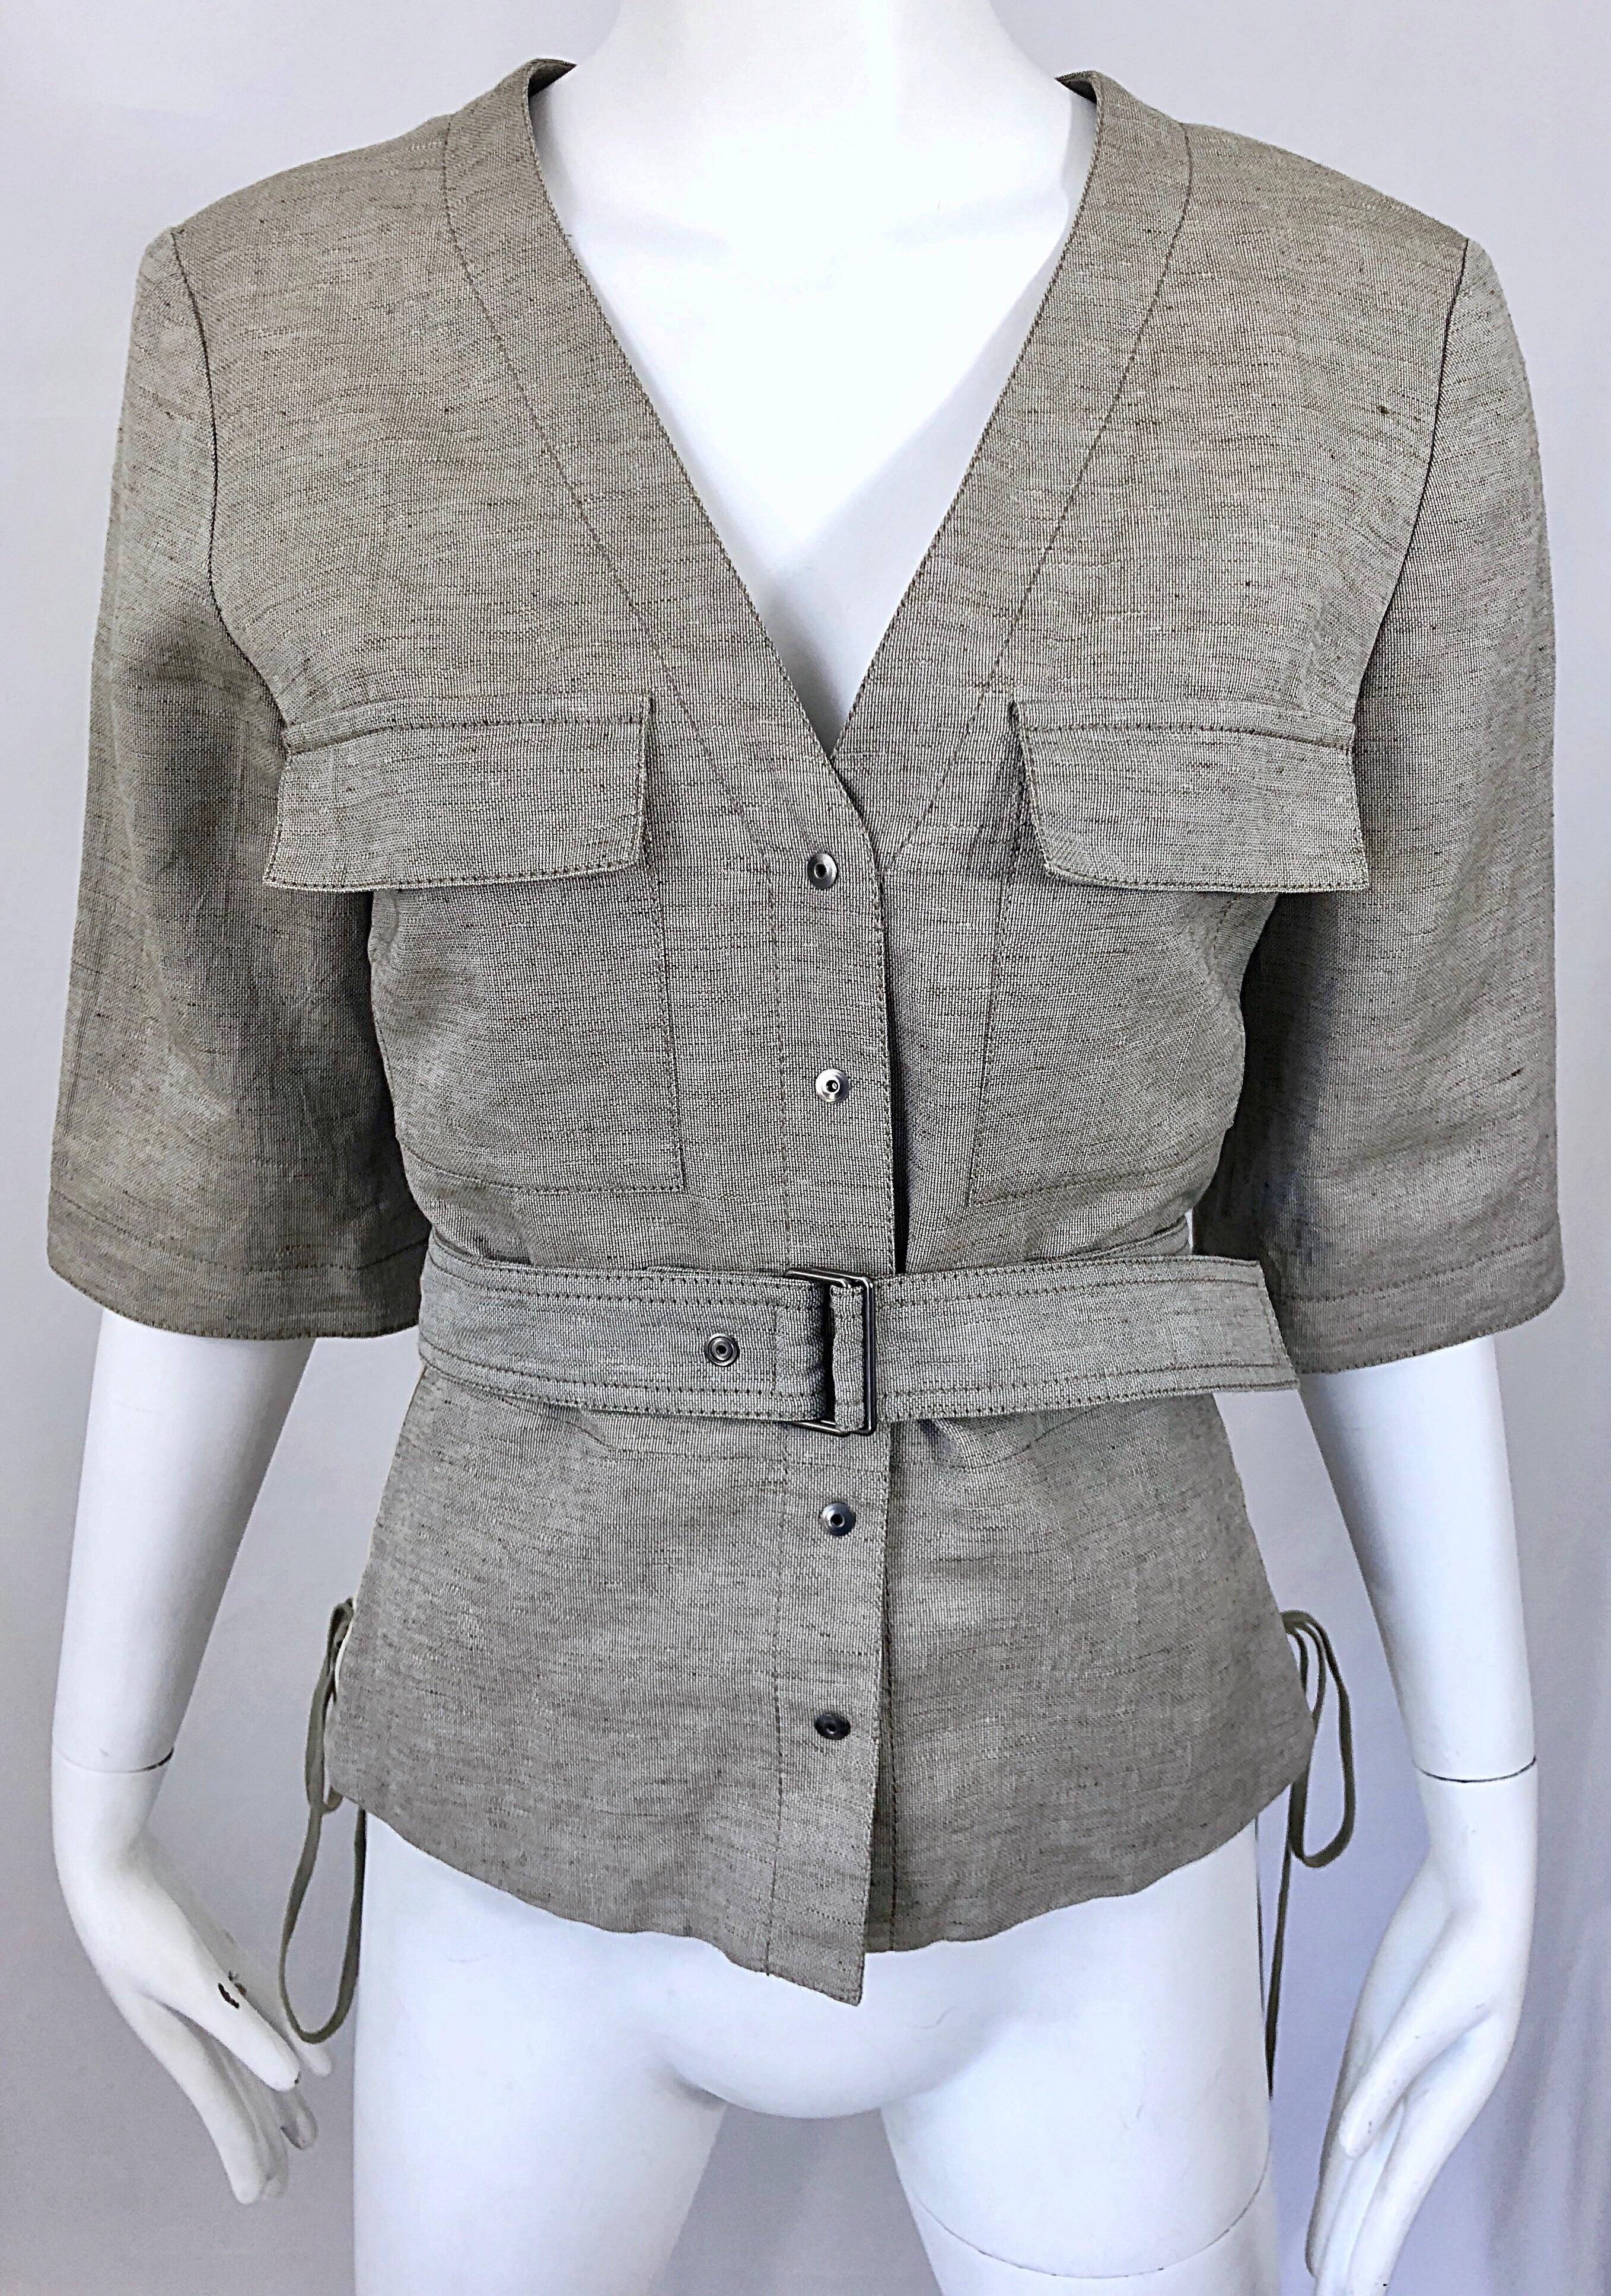 Chloe 1990s Stella McCartney Beige Khaki Linen Short Sleeve Safari Top Jacket For Sale 3